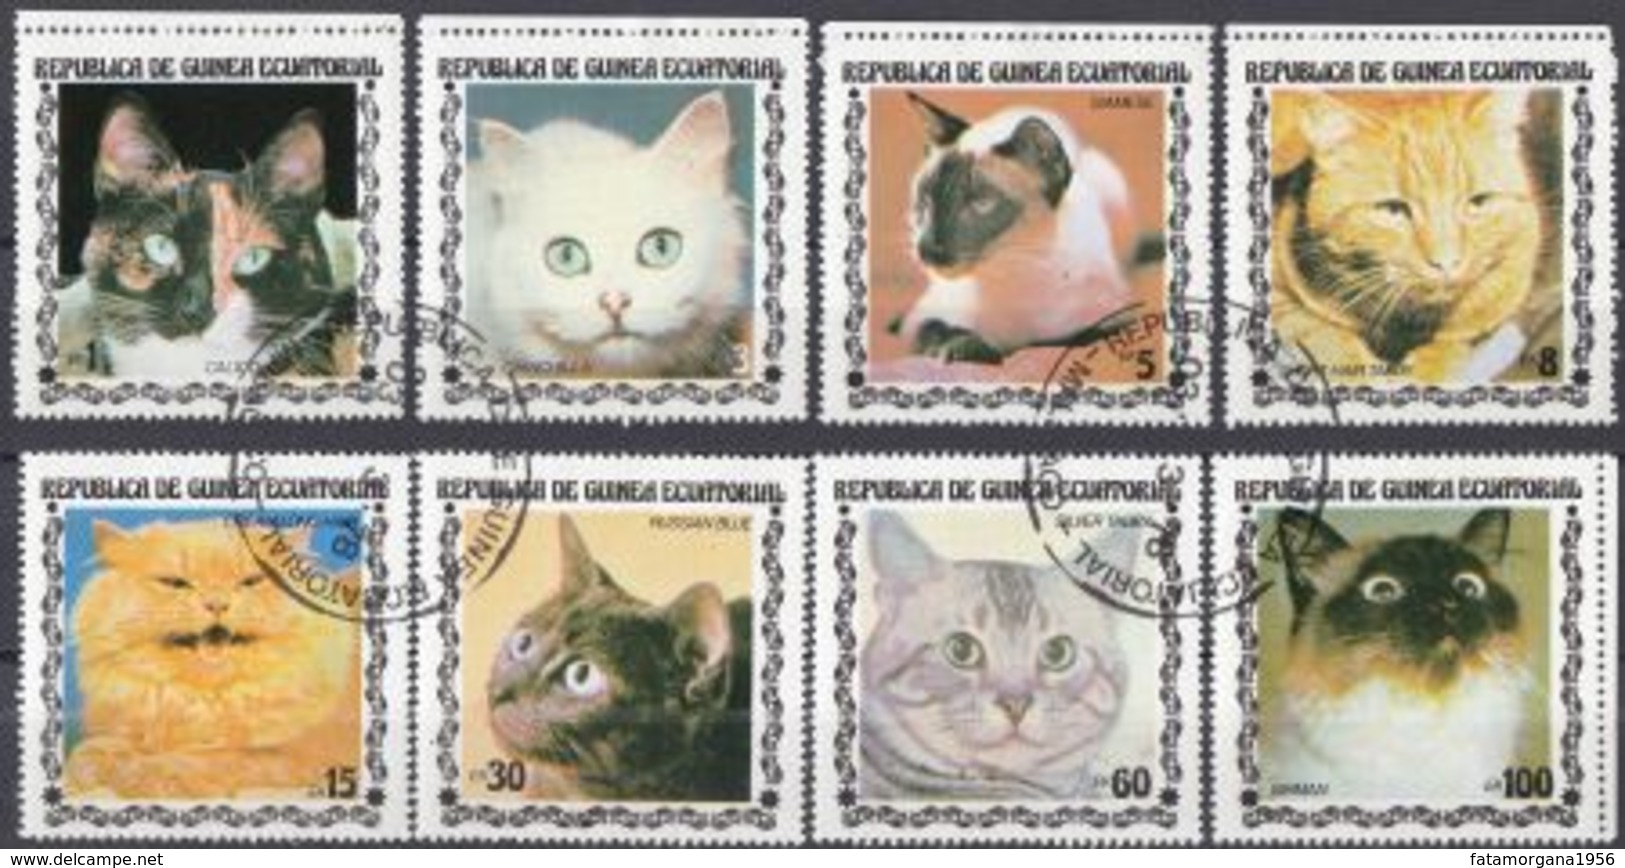 GUINEA EQUATORIALE - 1977 - Serie Completa Usata Di 8 Valori Raffiguranti Gatti Di Razze Diverse. - Gatti